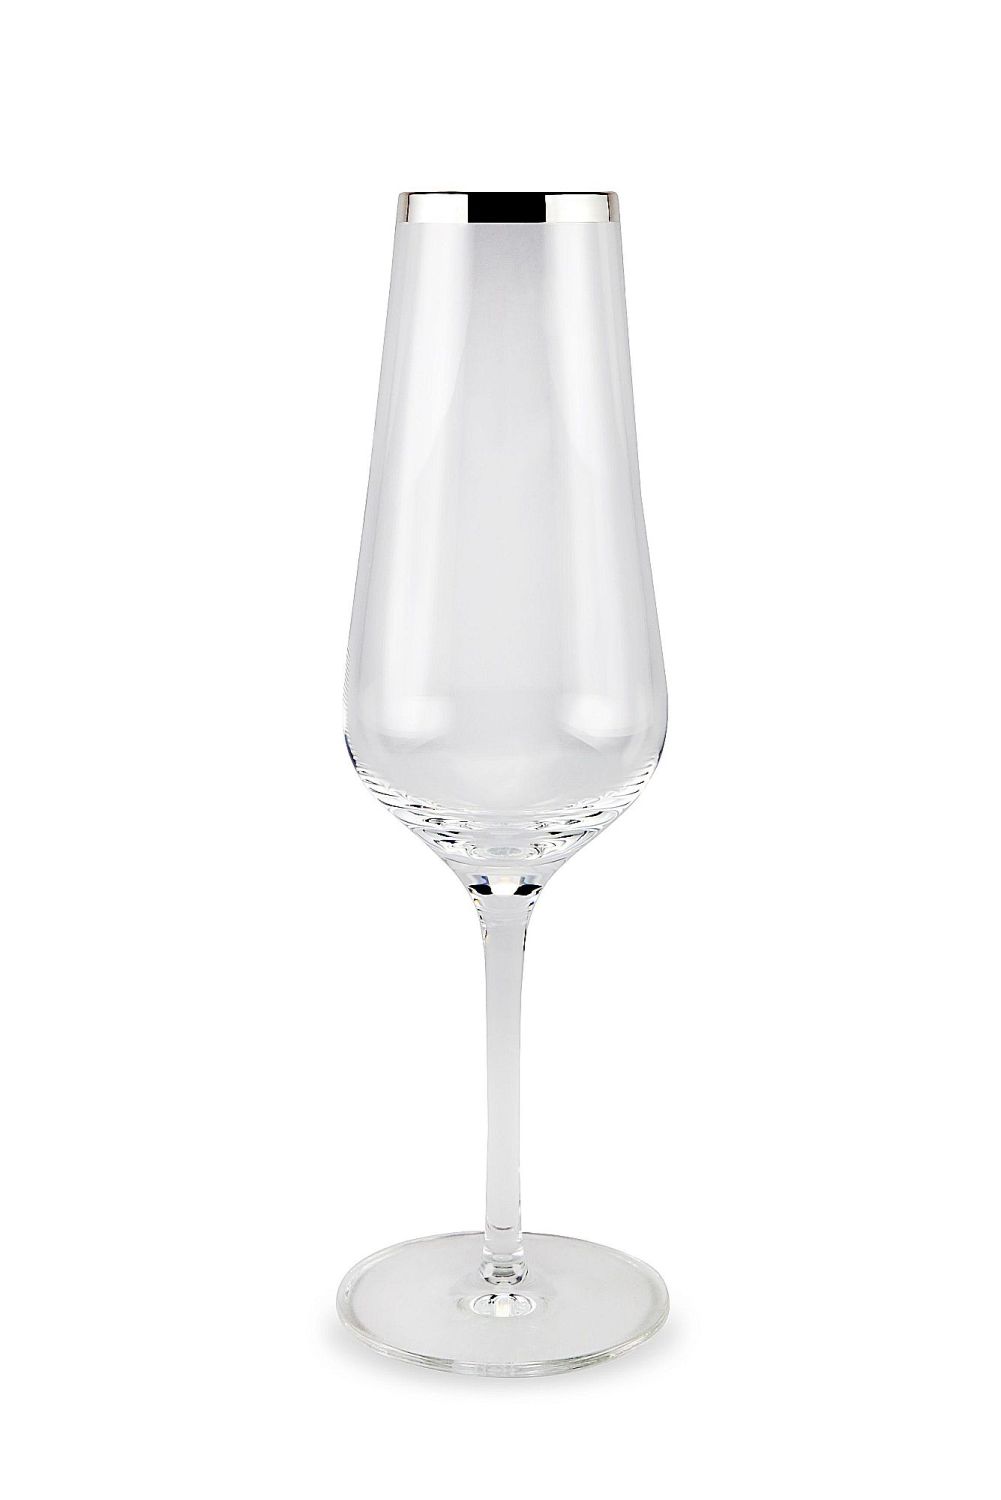 Sonja Quandt Champagnerglas Avantgarde Kristallglas mit Silberrand